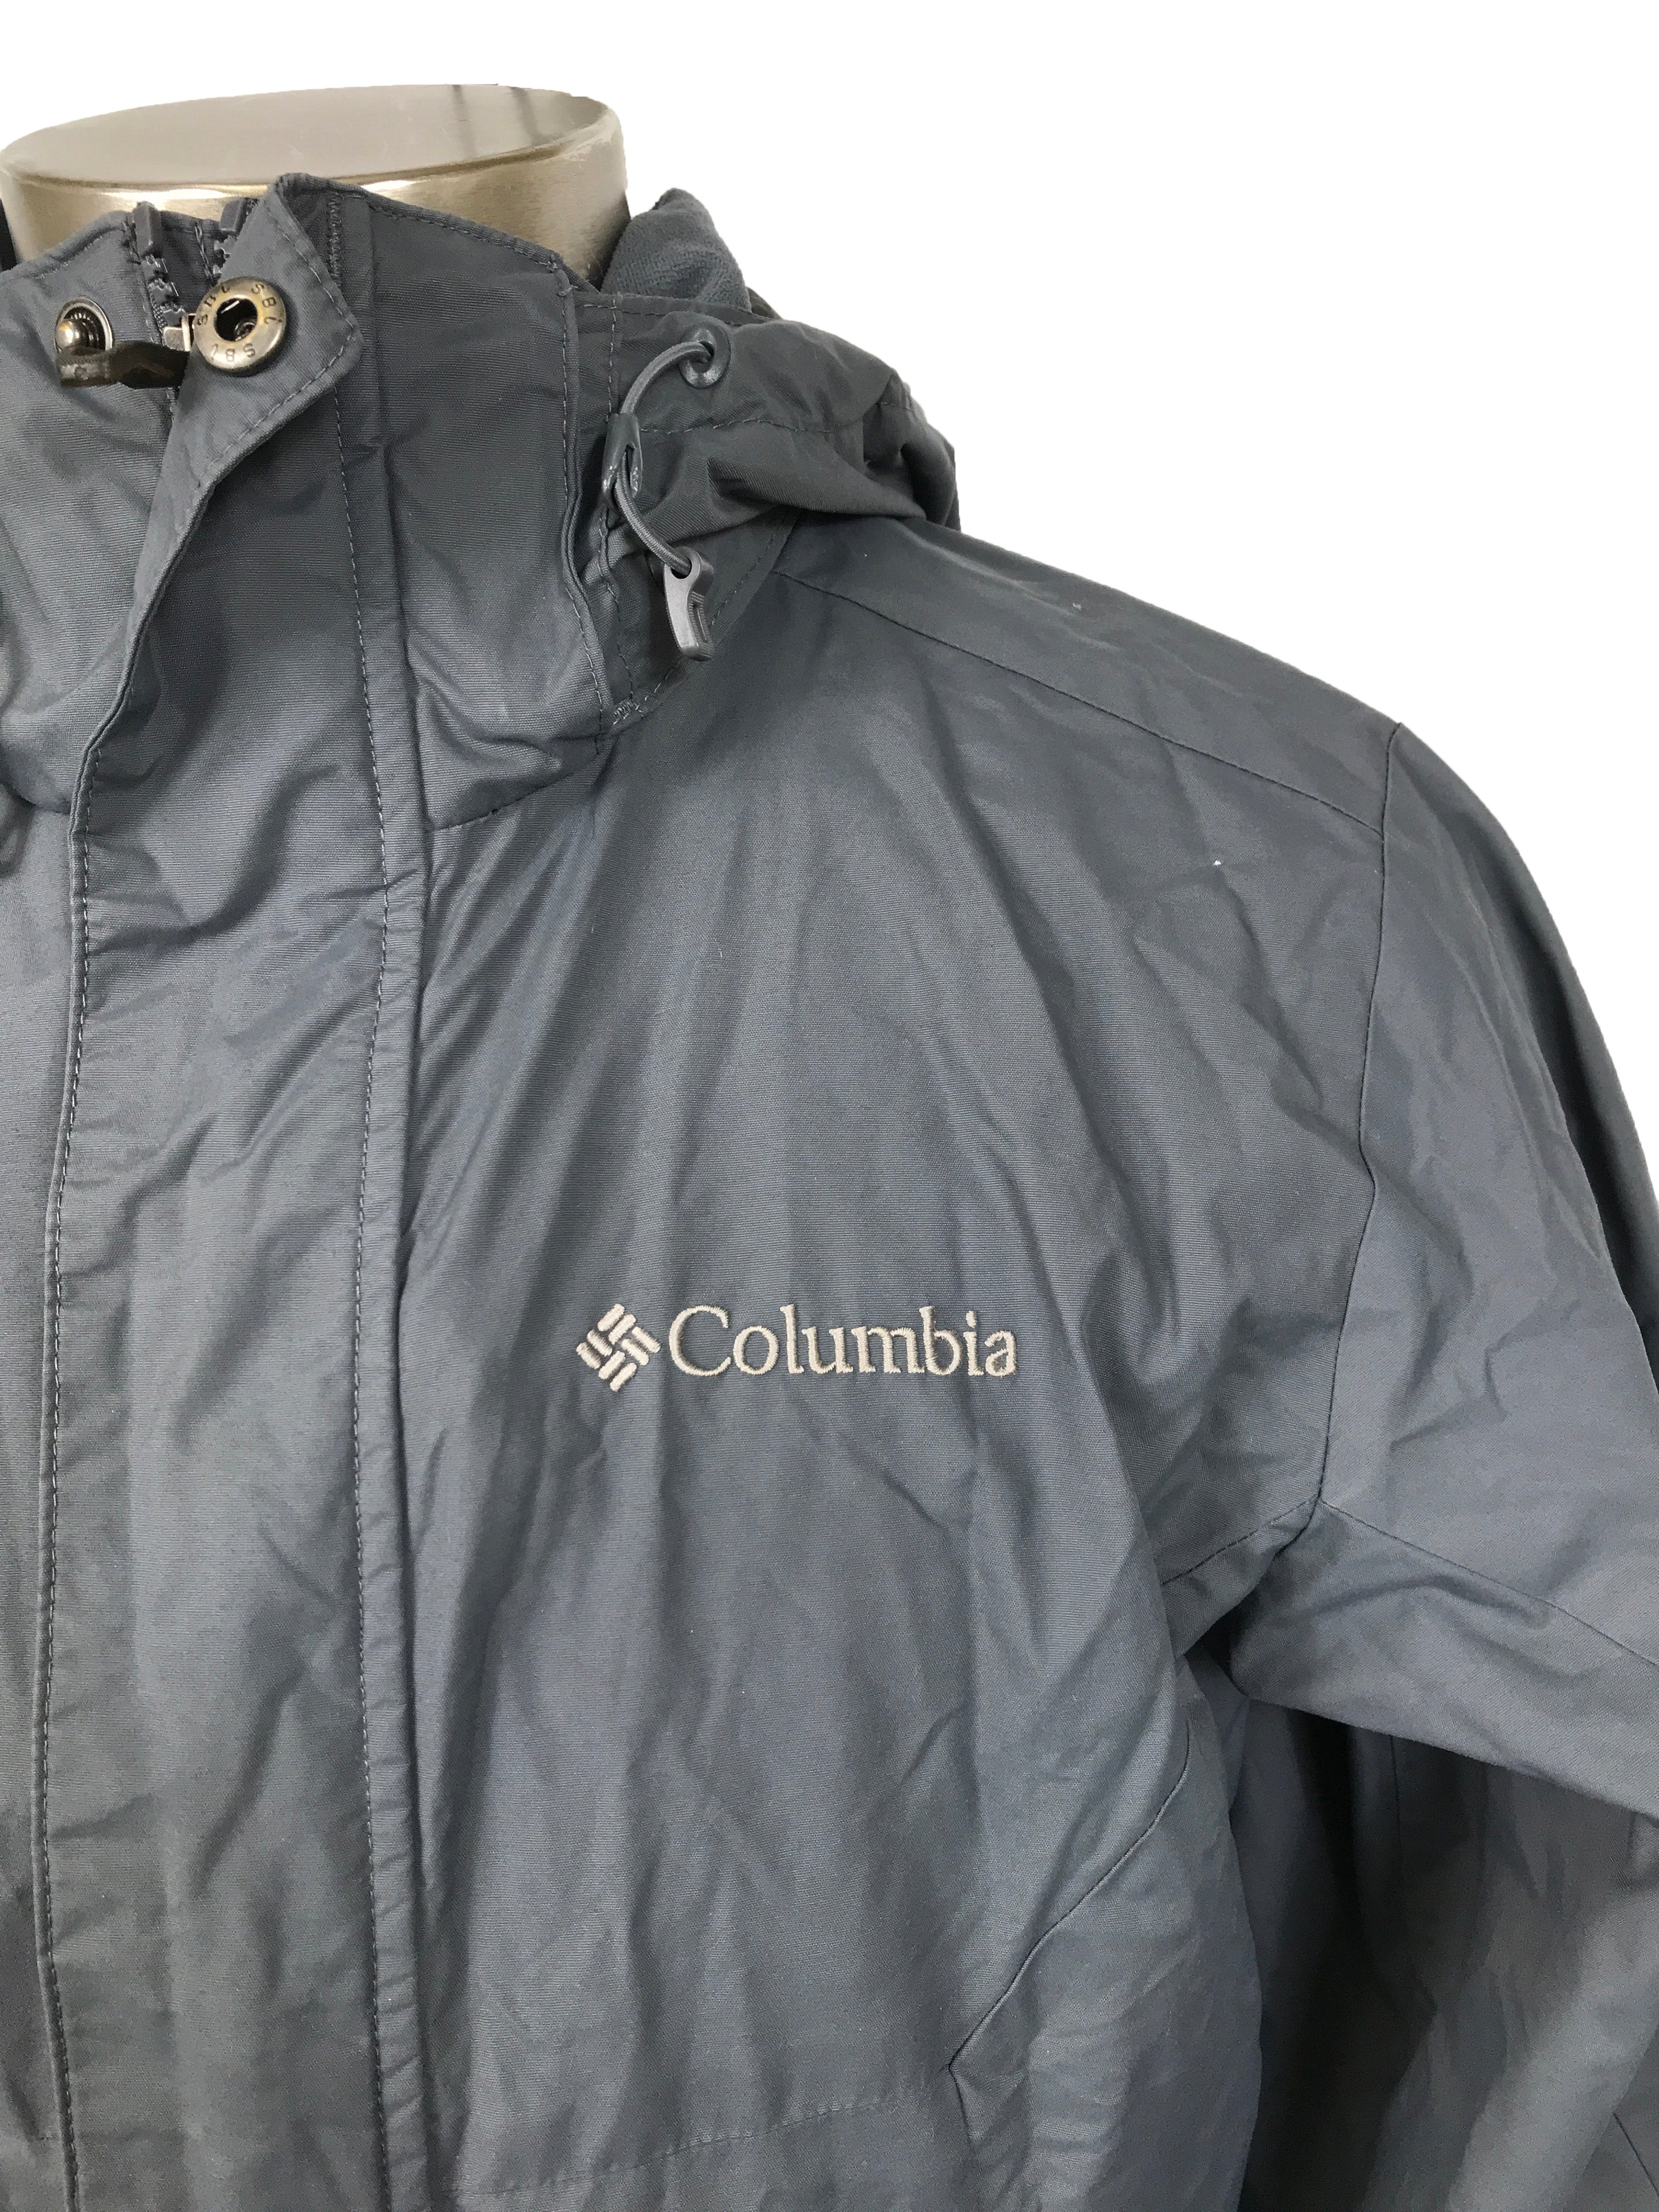 Columbia Gray Jacket Men's Size S